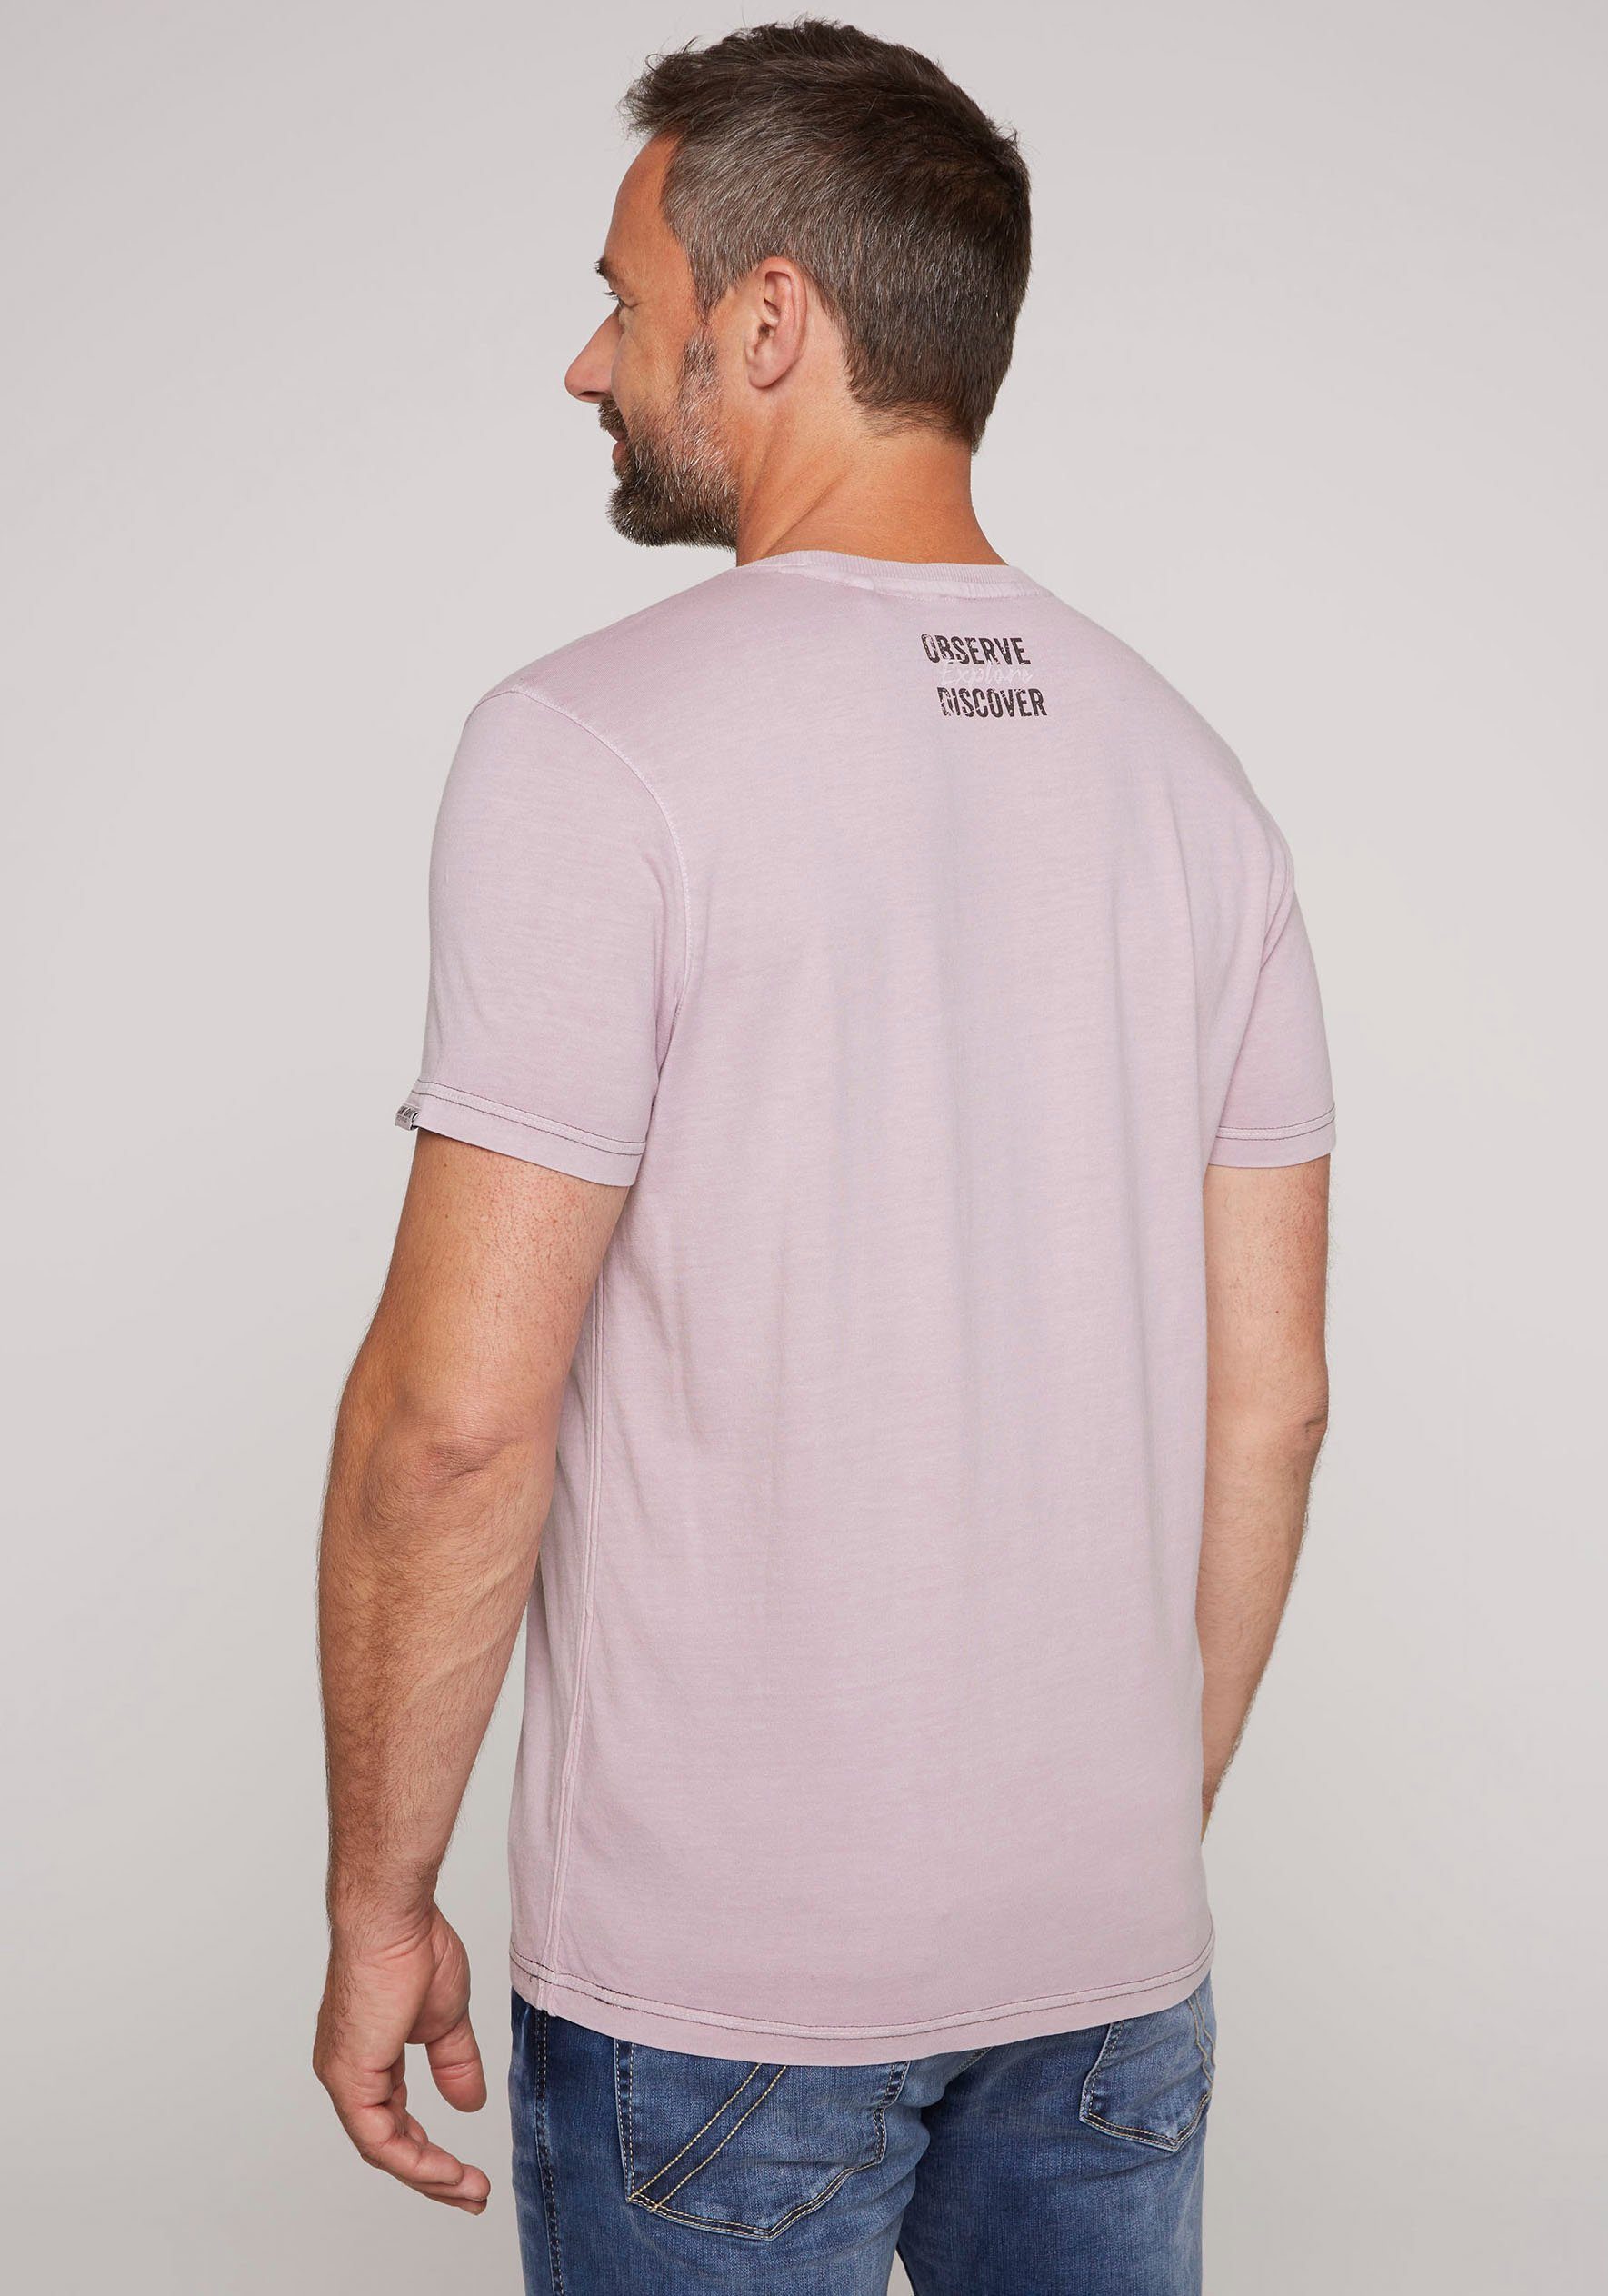 CAMP DAVID T-Shirt violet Kontrastnähten mit french